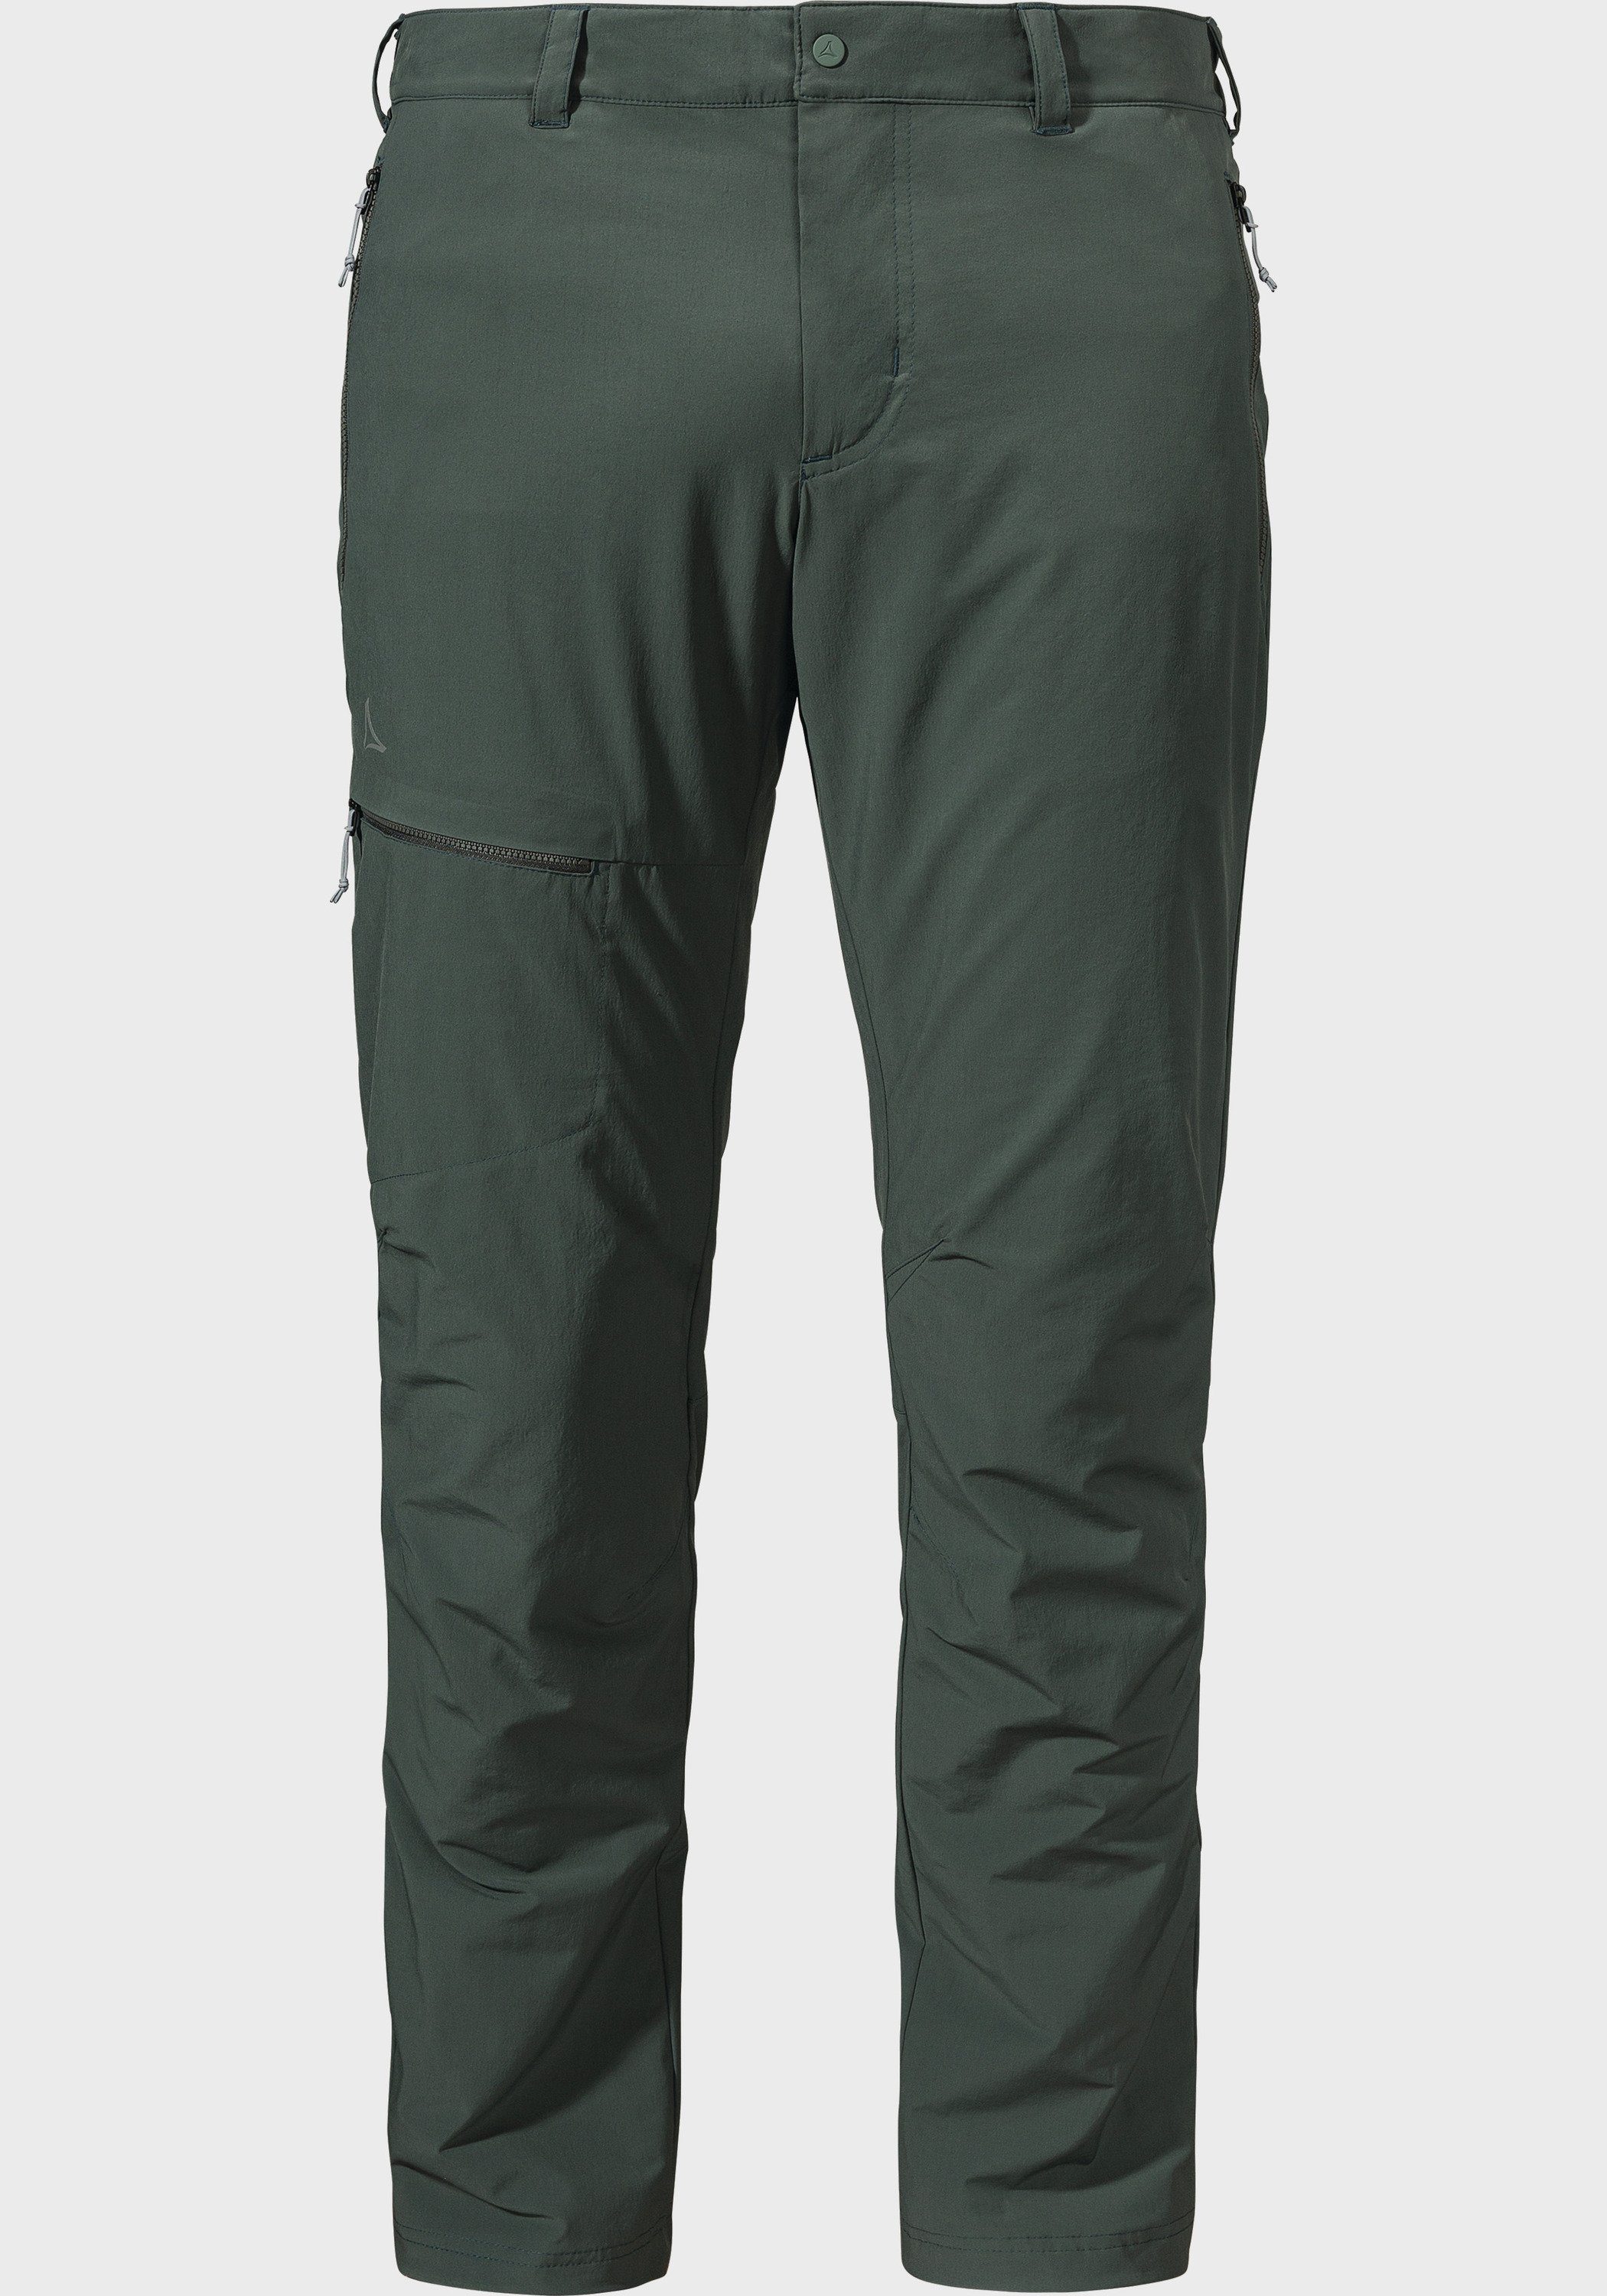 Schöffel Outdoorhose Pants Koper1 Warm M grün